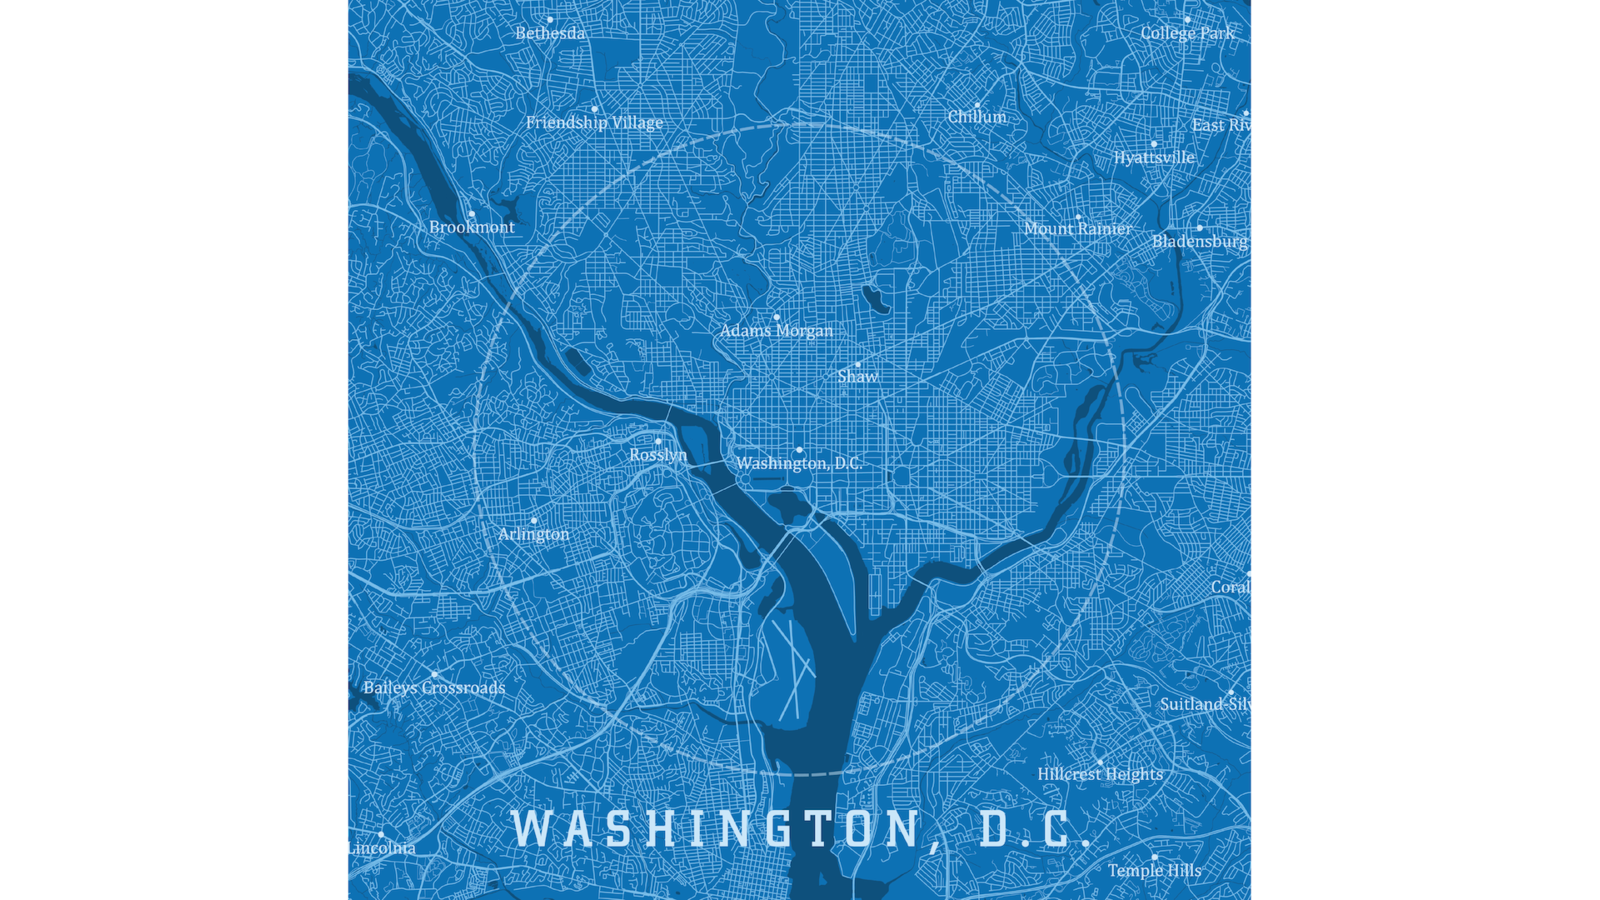 Map of Washington D.C.